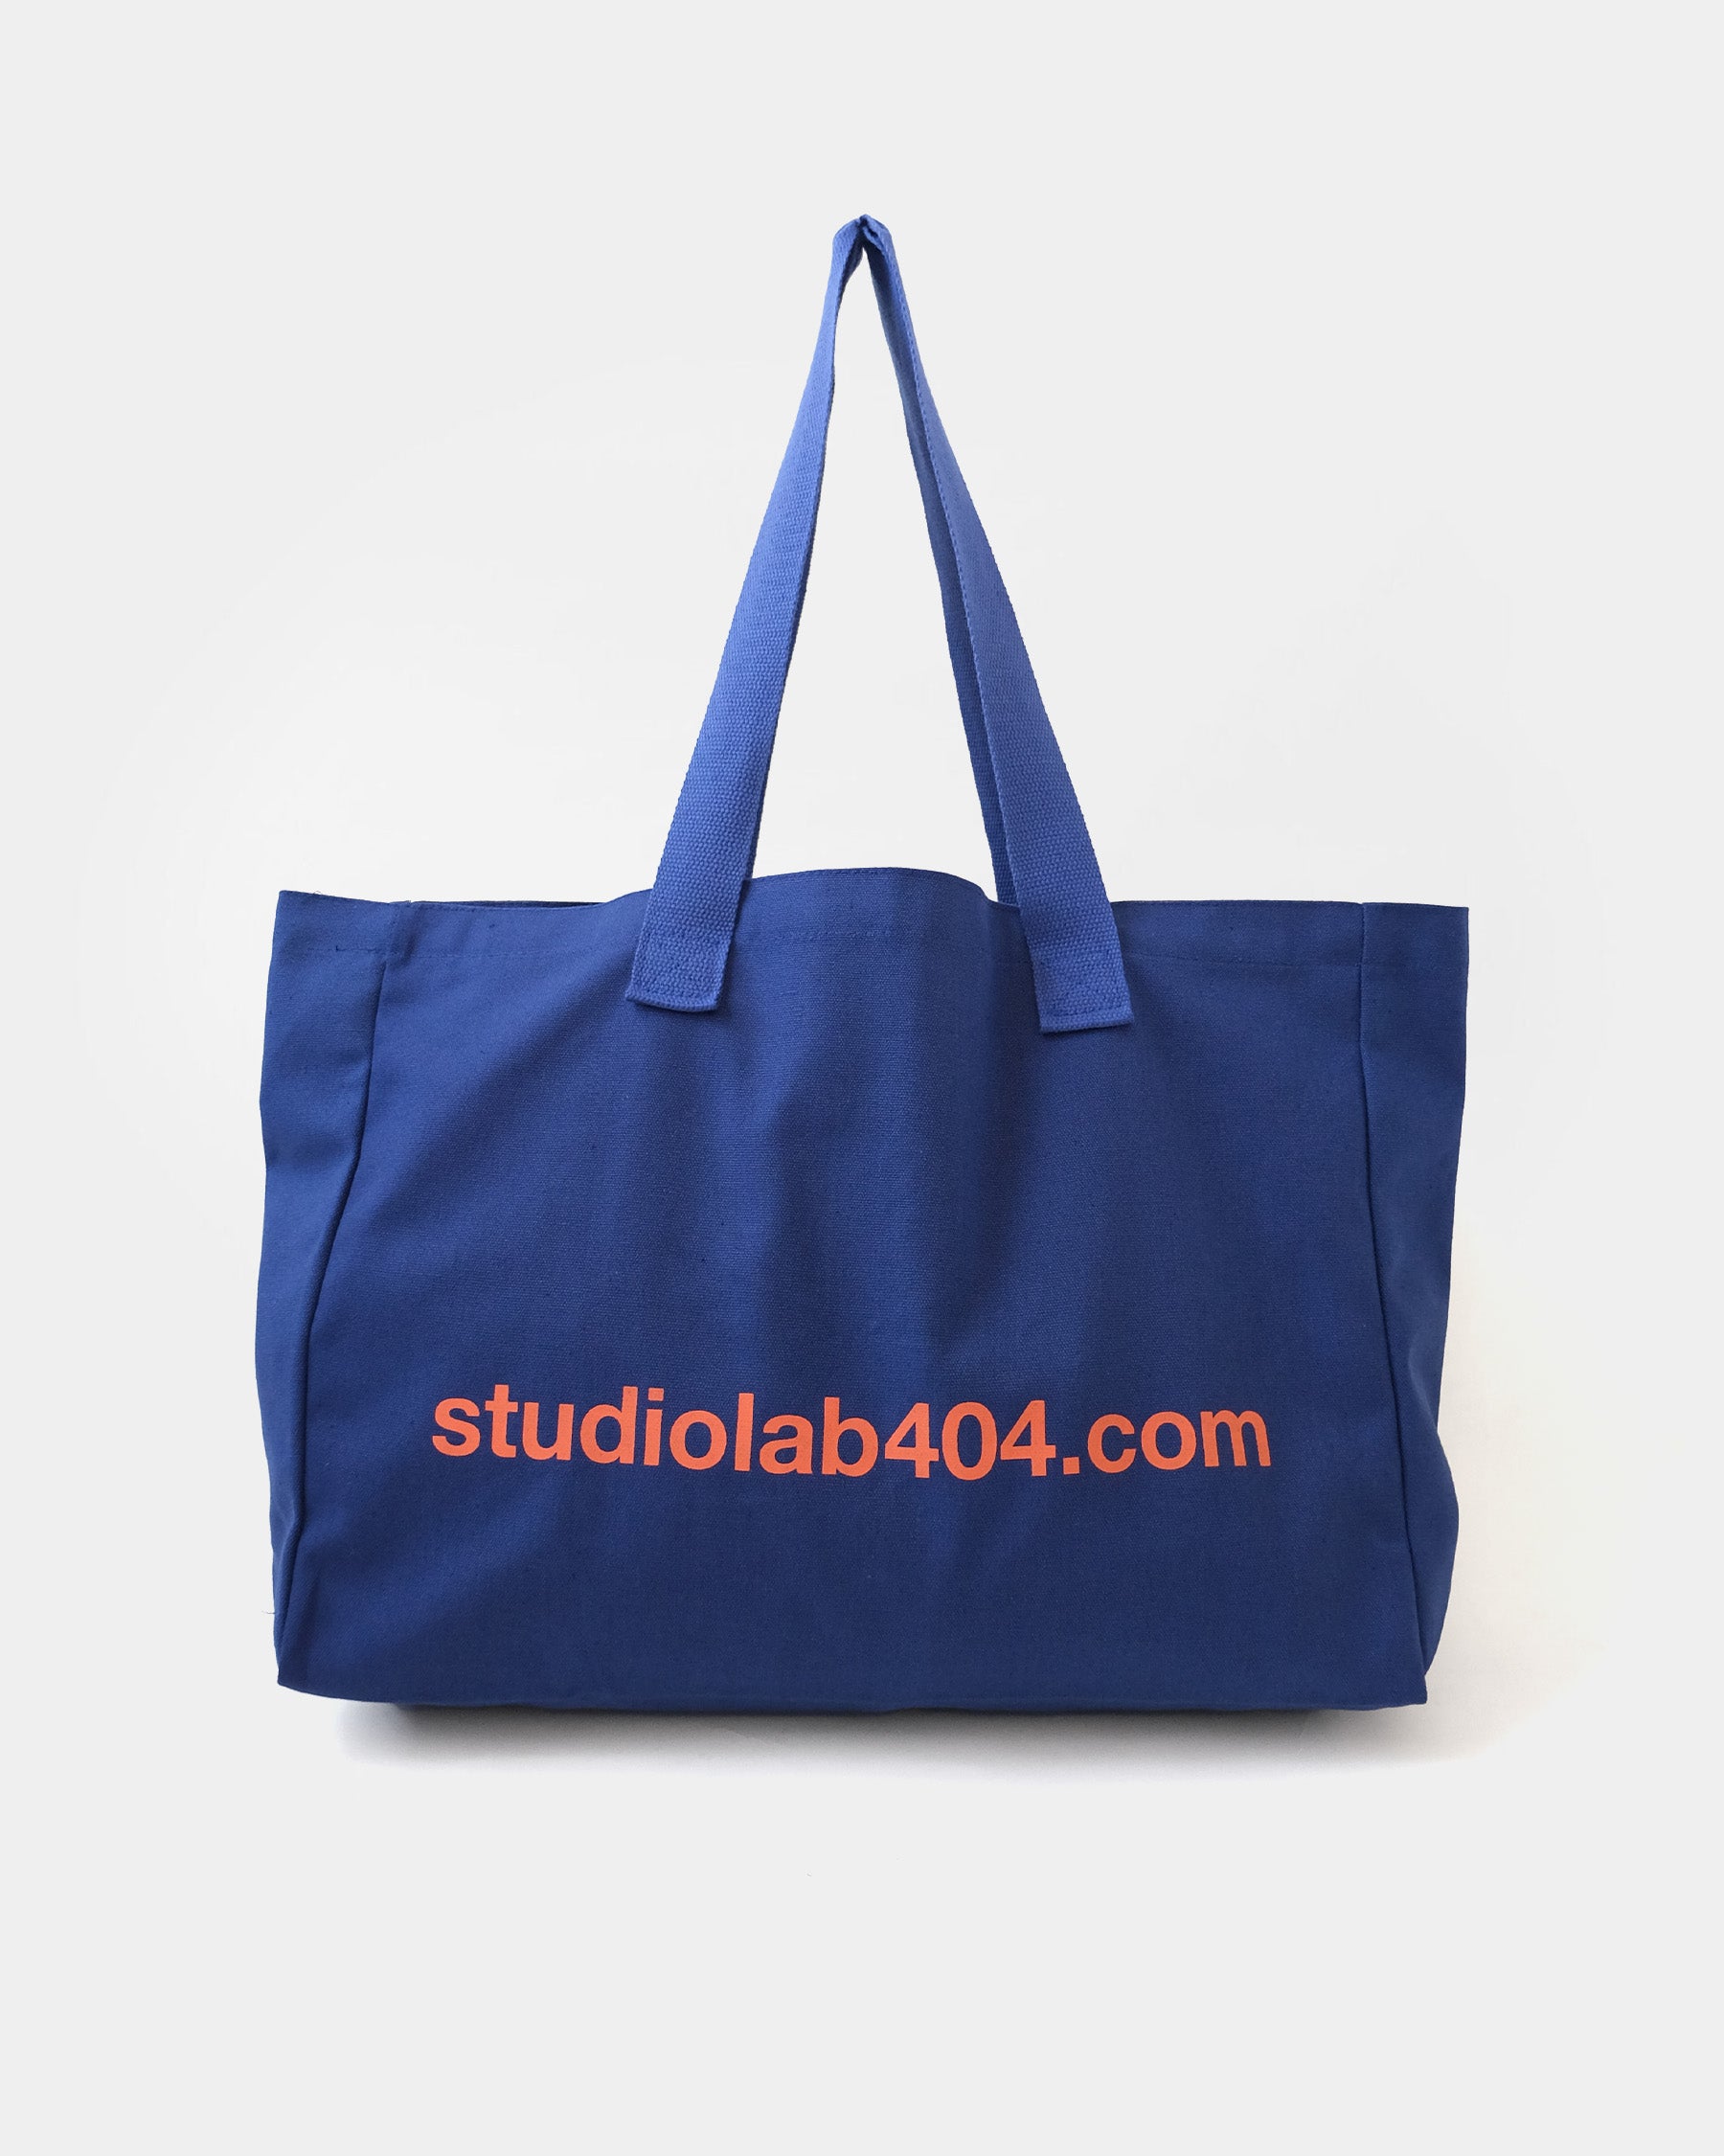 studiolab404.com オリジナル] 404 Canvas Tote Bag - Navy